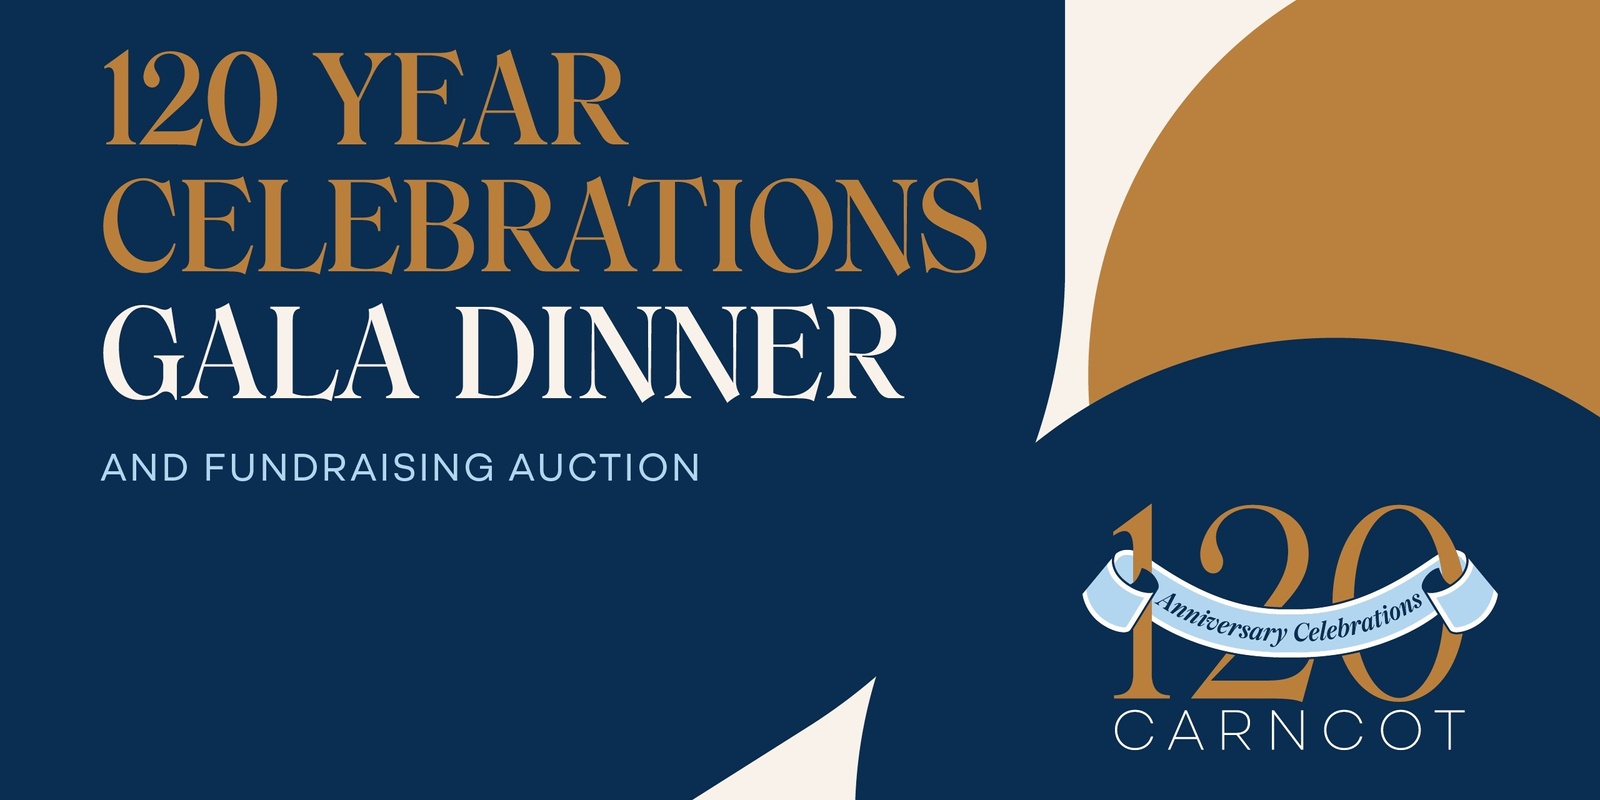 Banner image for Carncot 120 Year Celebrations Fundraising Gala Dinner